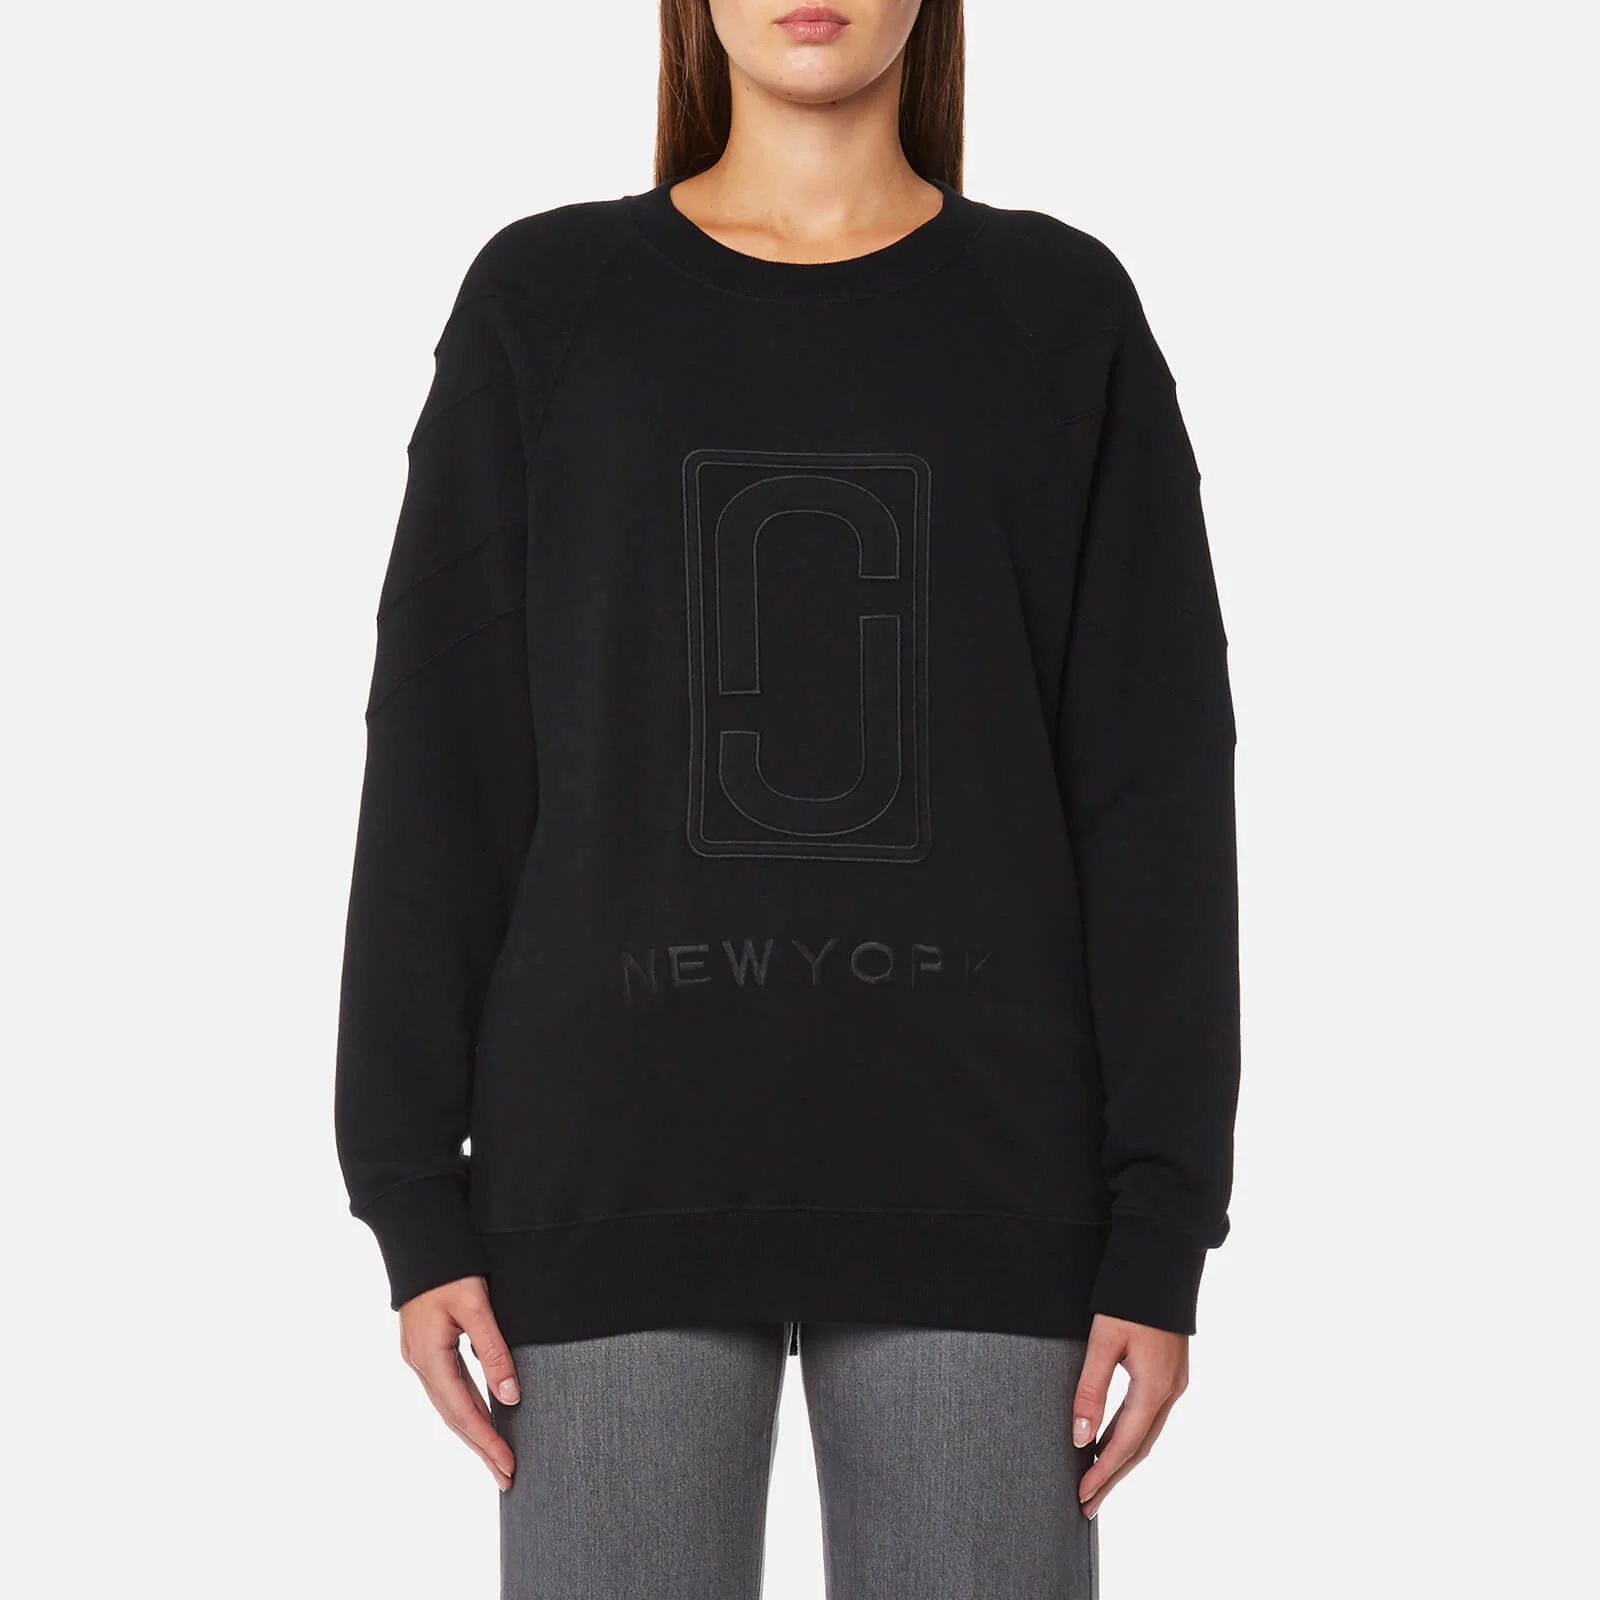 Marc Jacobs Women's Logo Sweatshirt - Black Image 1